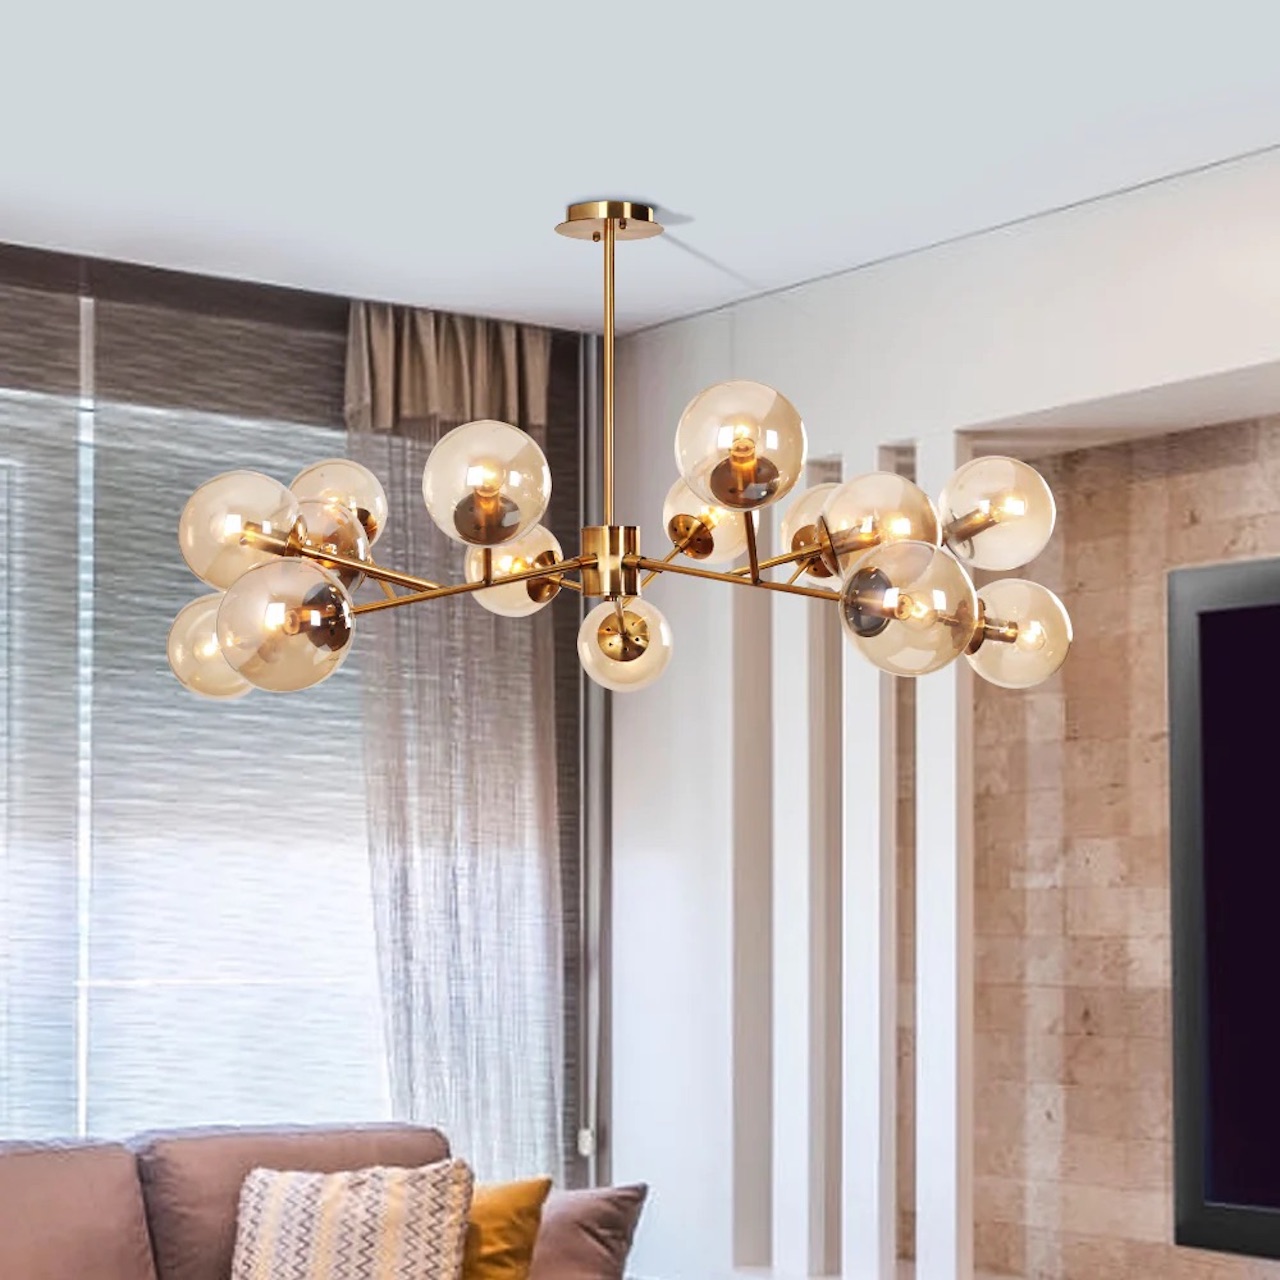 Living Room Chandelier Ideas: 15 Beautiful Centerpiece Designs